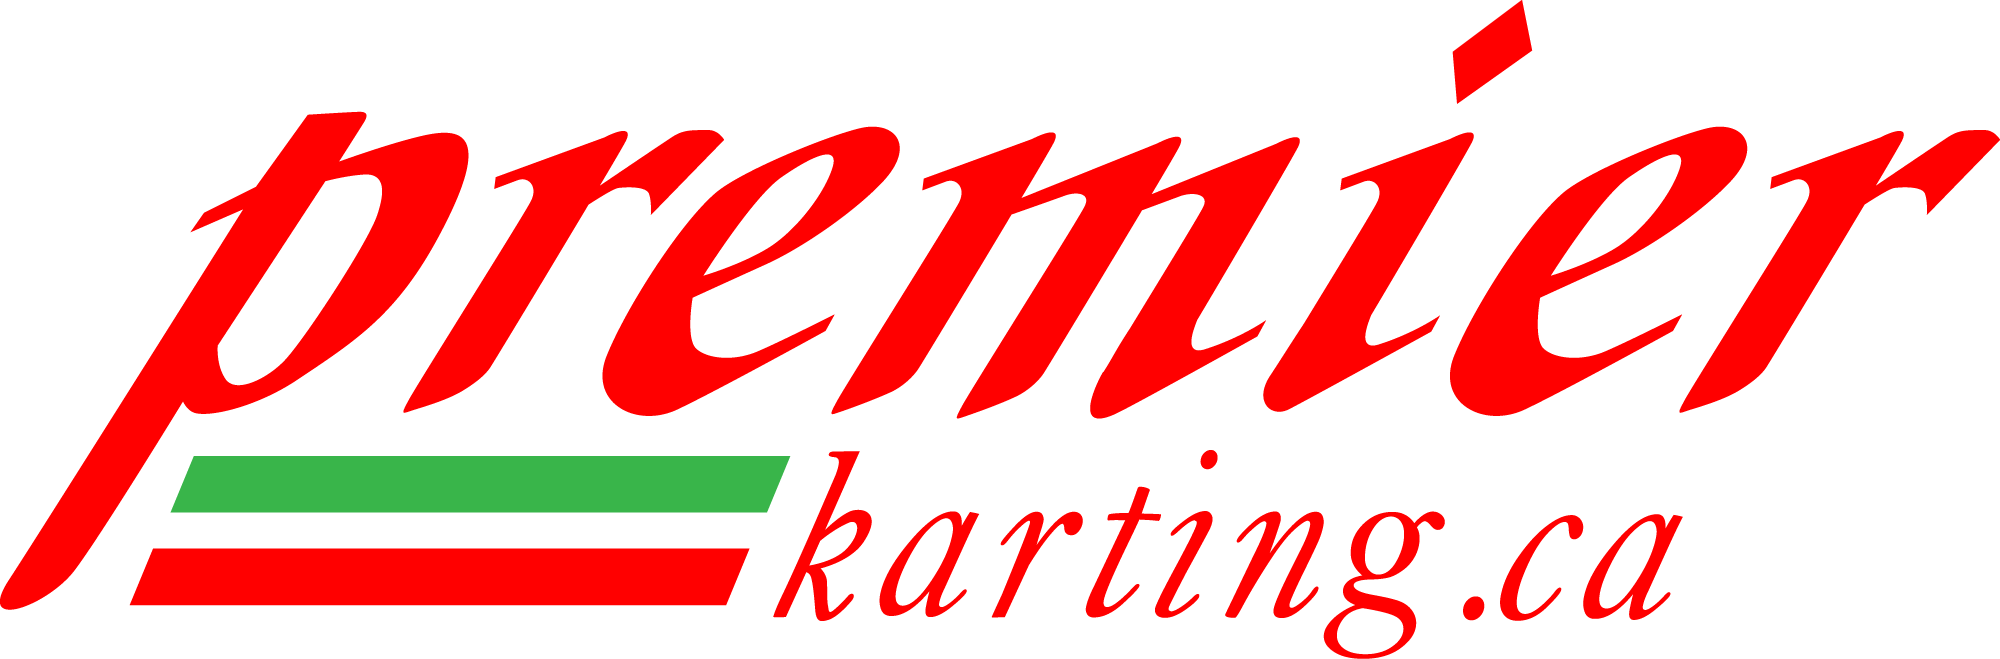 Premier Karting